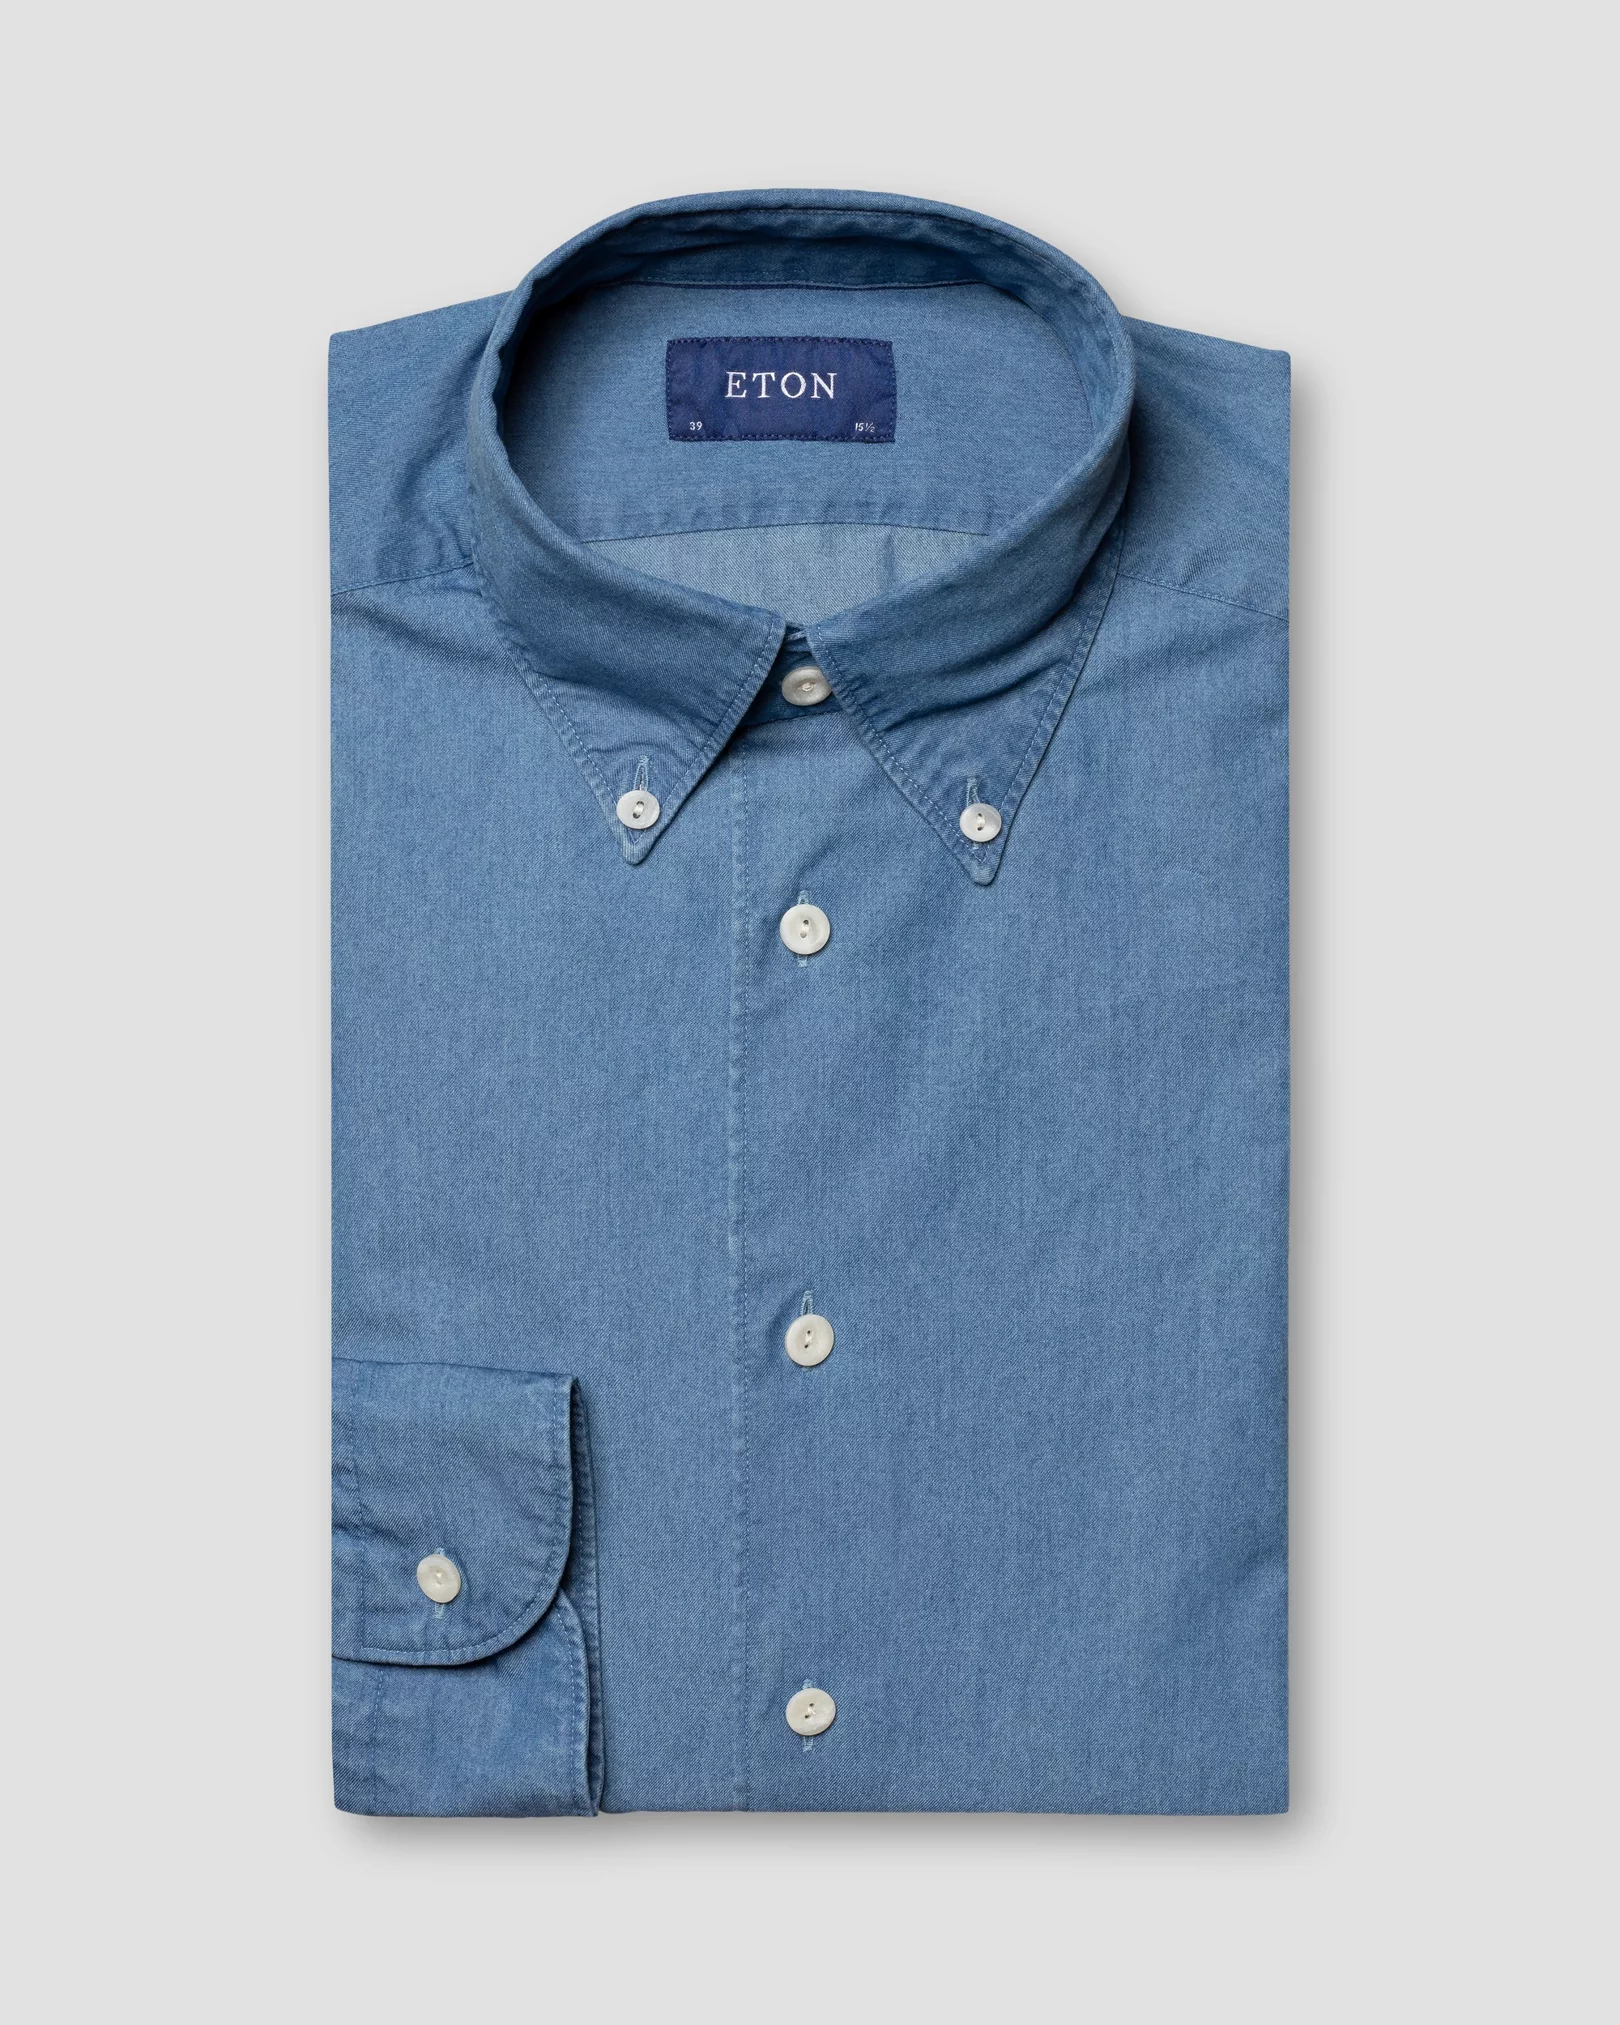 Chemise bleu moyen en denim léger – Boutonnée